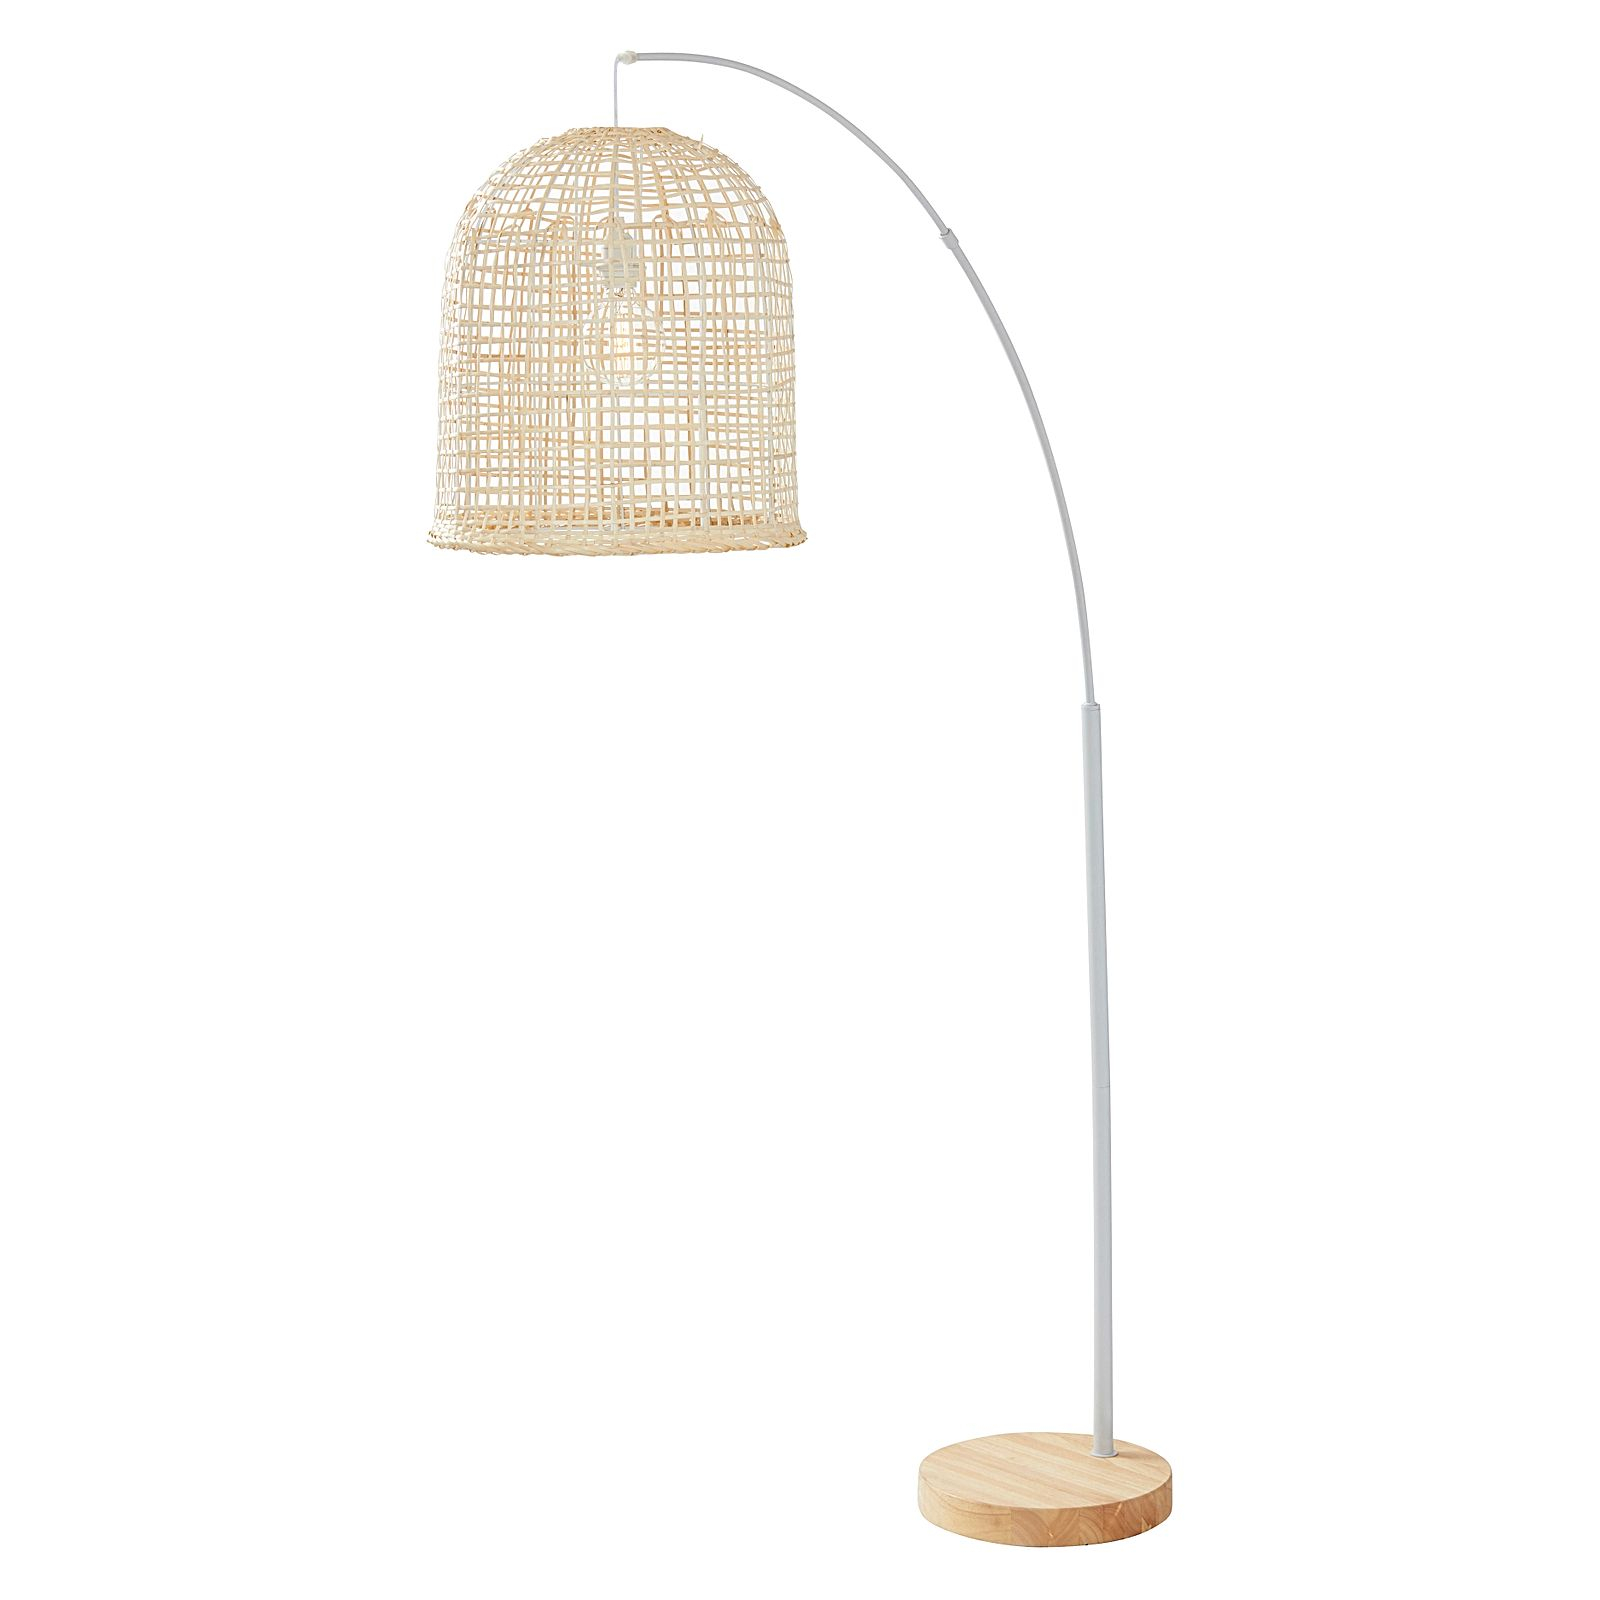 Weave Floor Lamp with regard to size 1600 X 1600